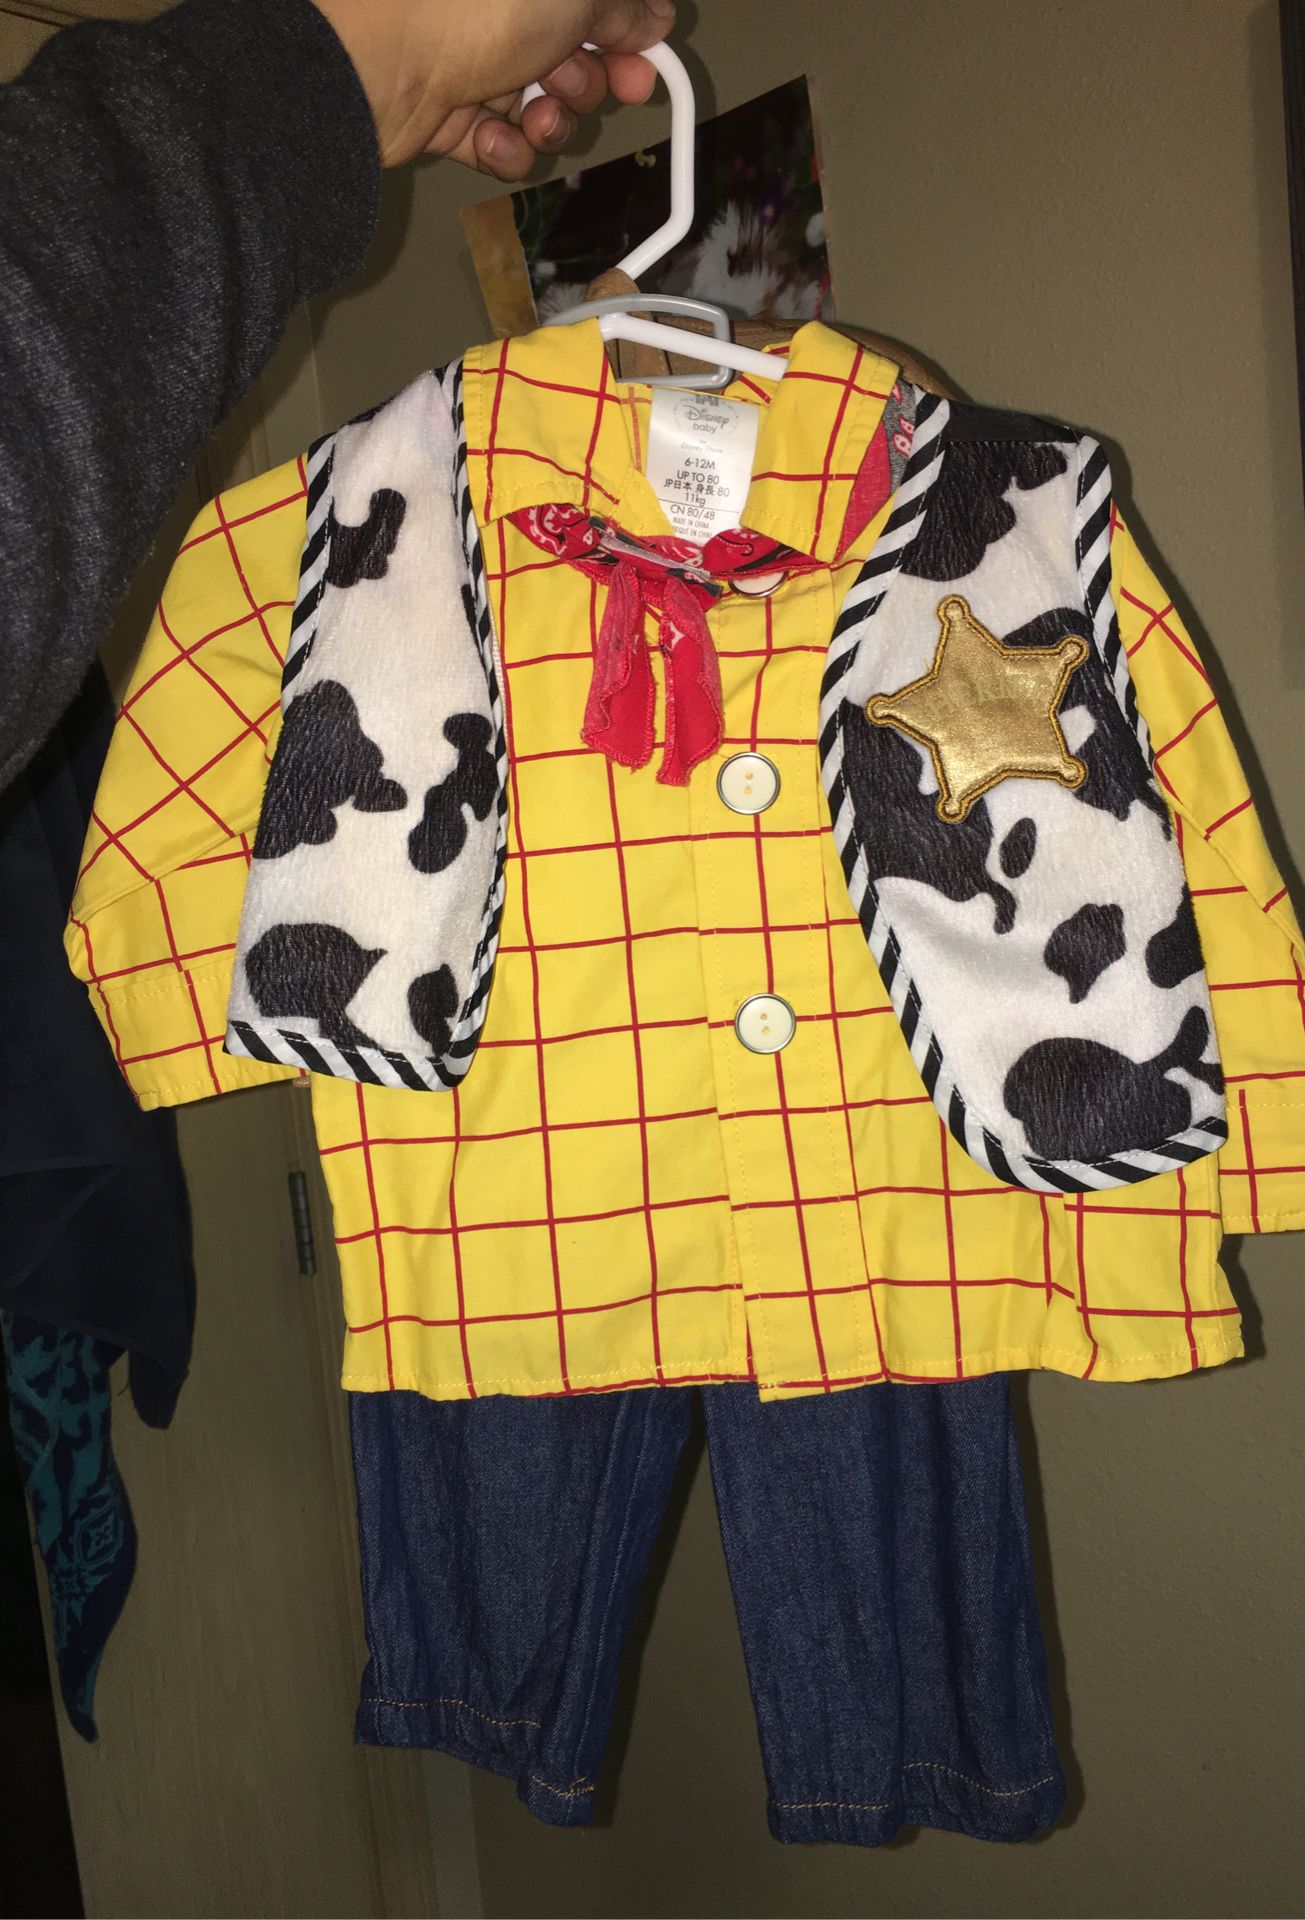 Woody costume